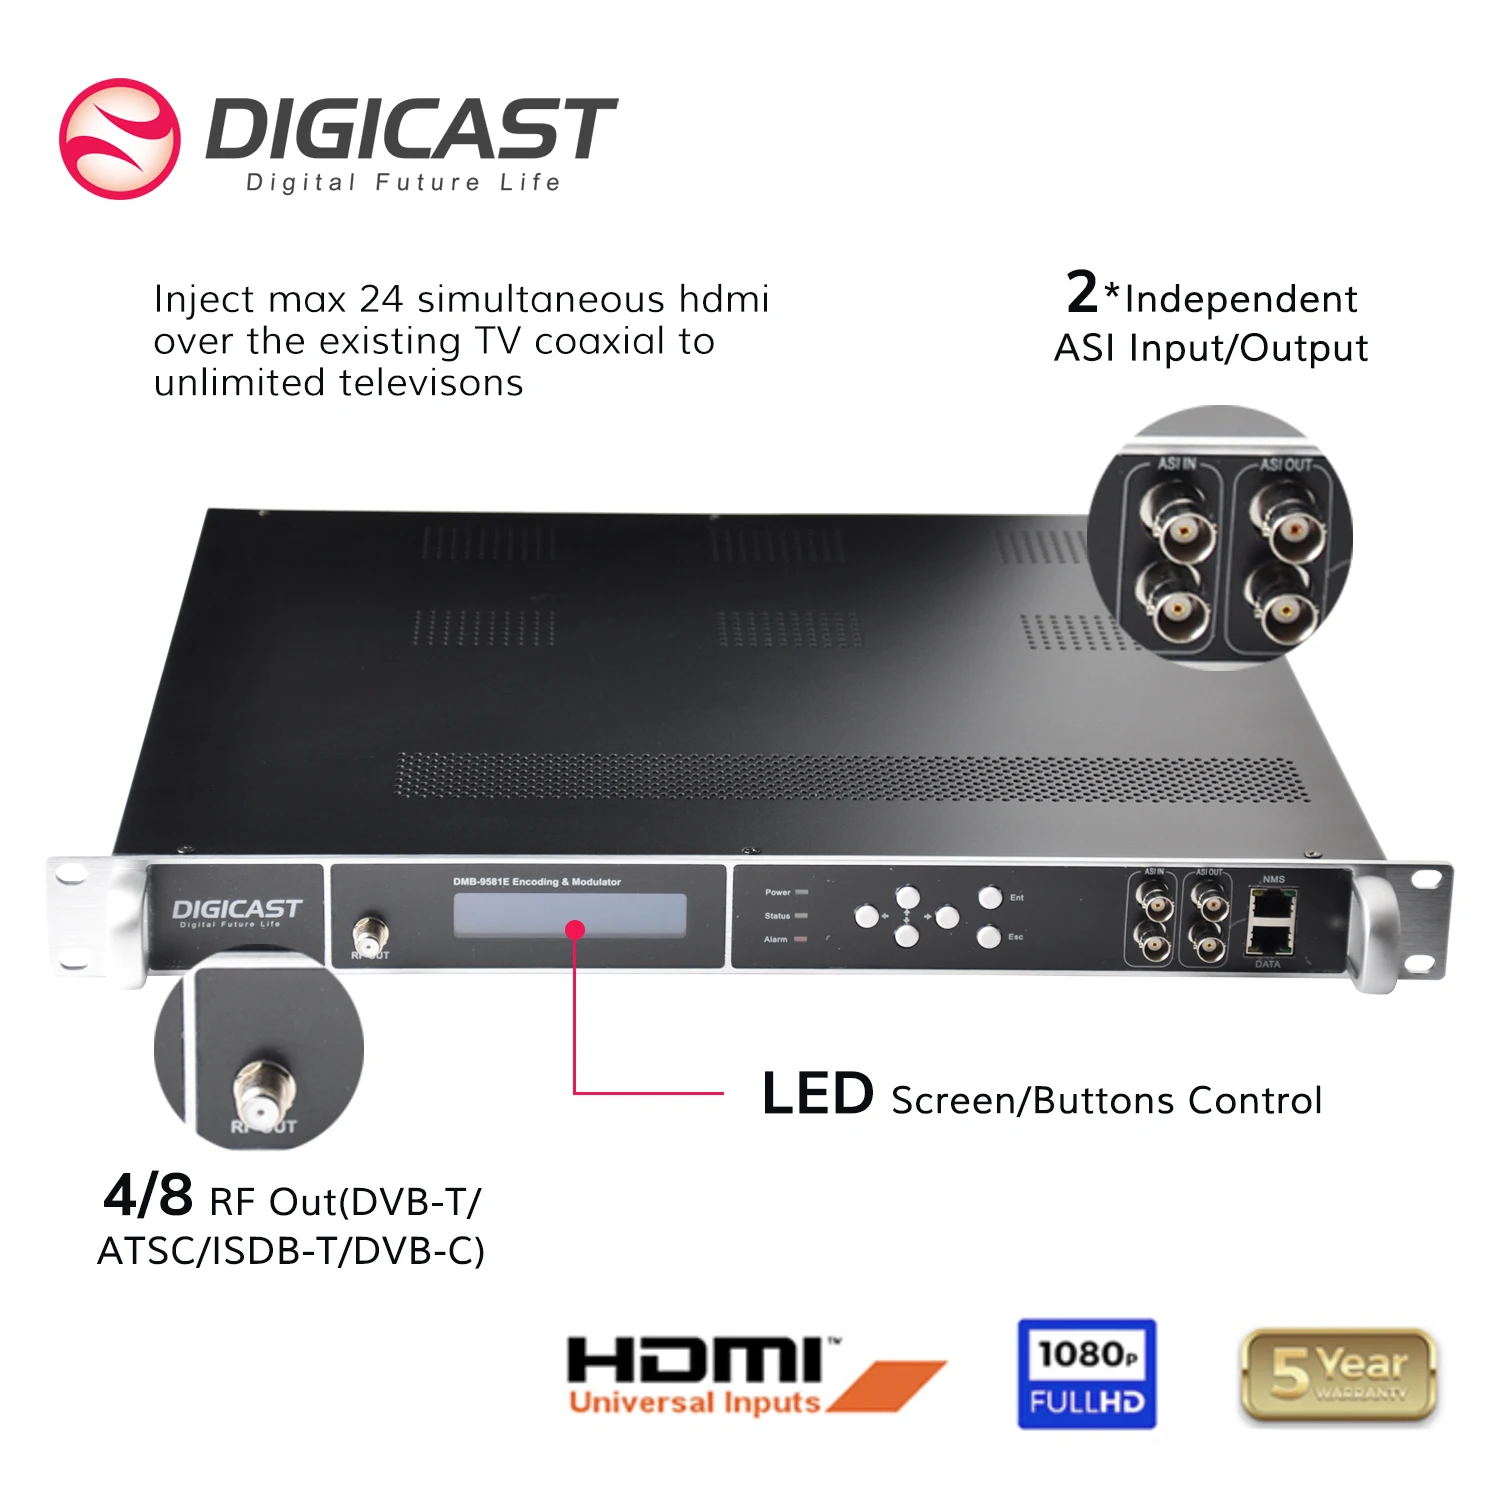 

DIGICAST CABLE TV Encoder Modulator HD MPEG-4 AVC HD MI RF DVBT Modulator for Convert HD MI to DVB-T RF